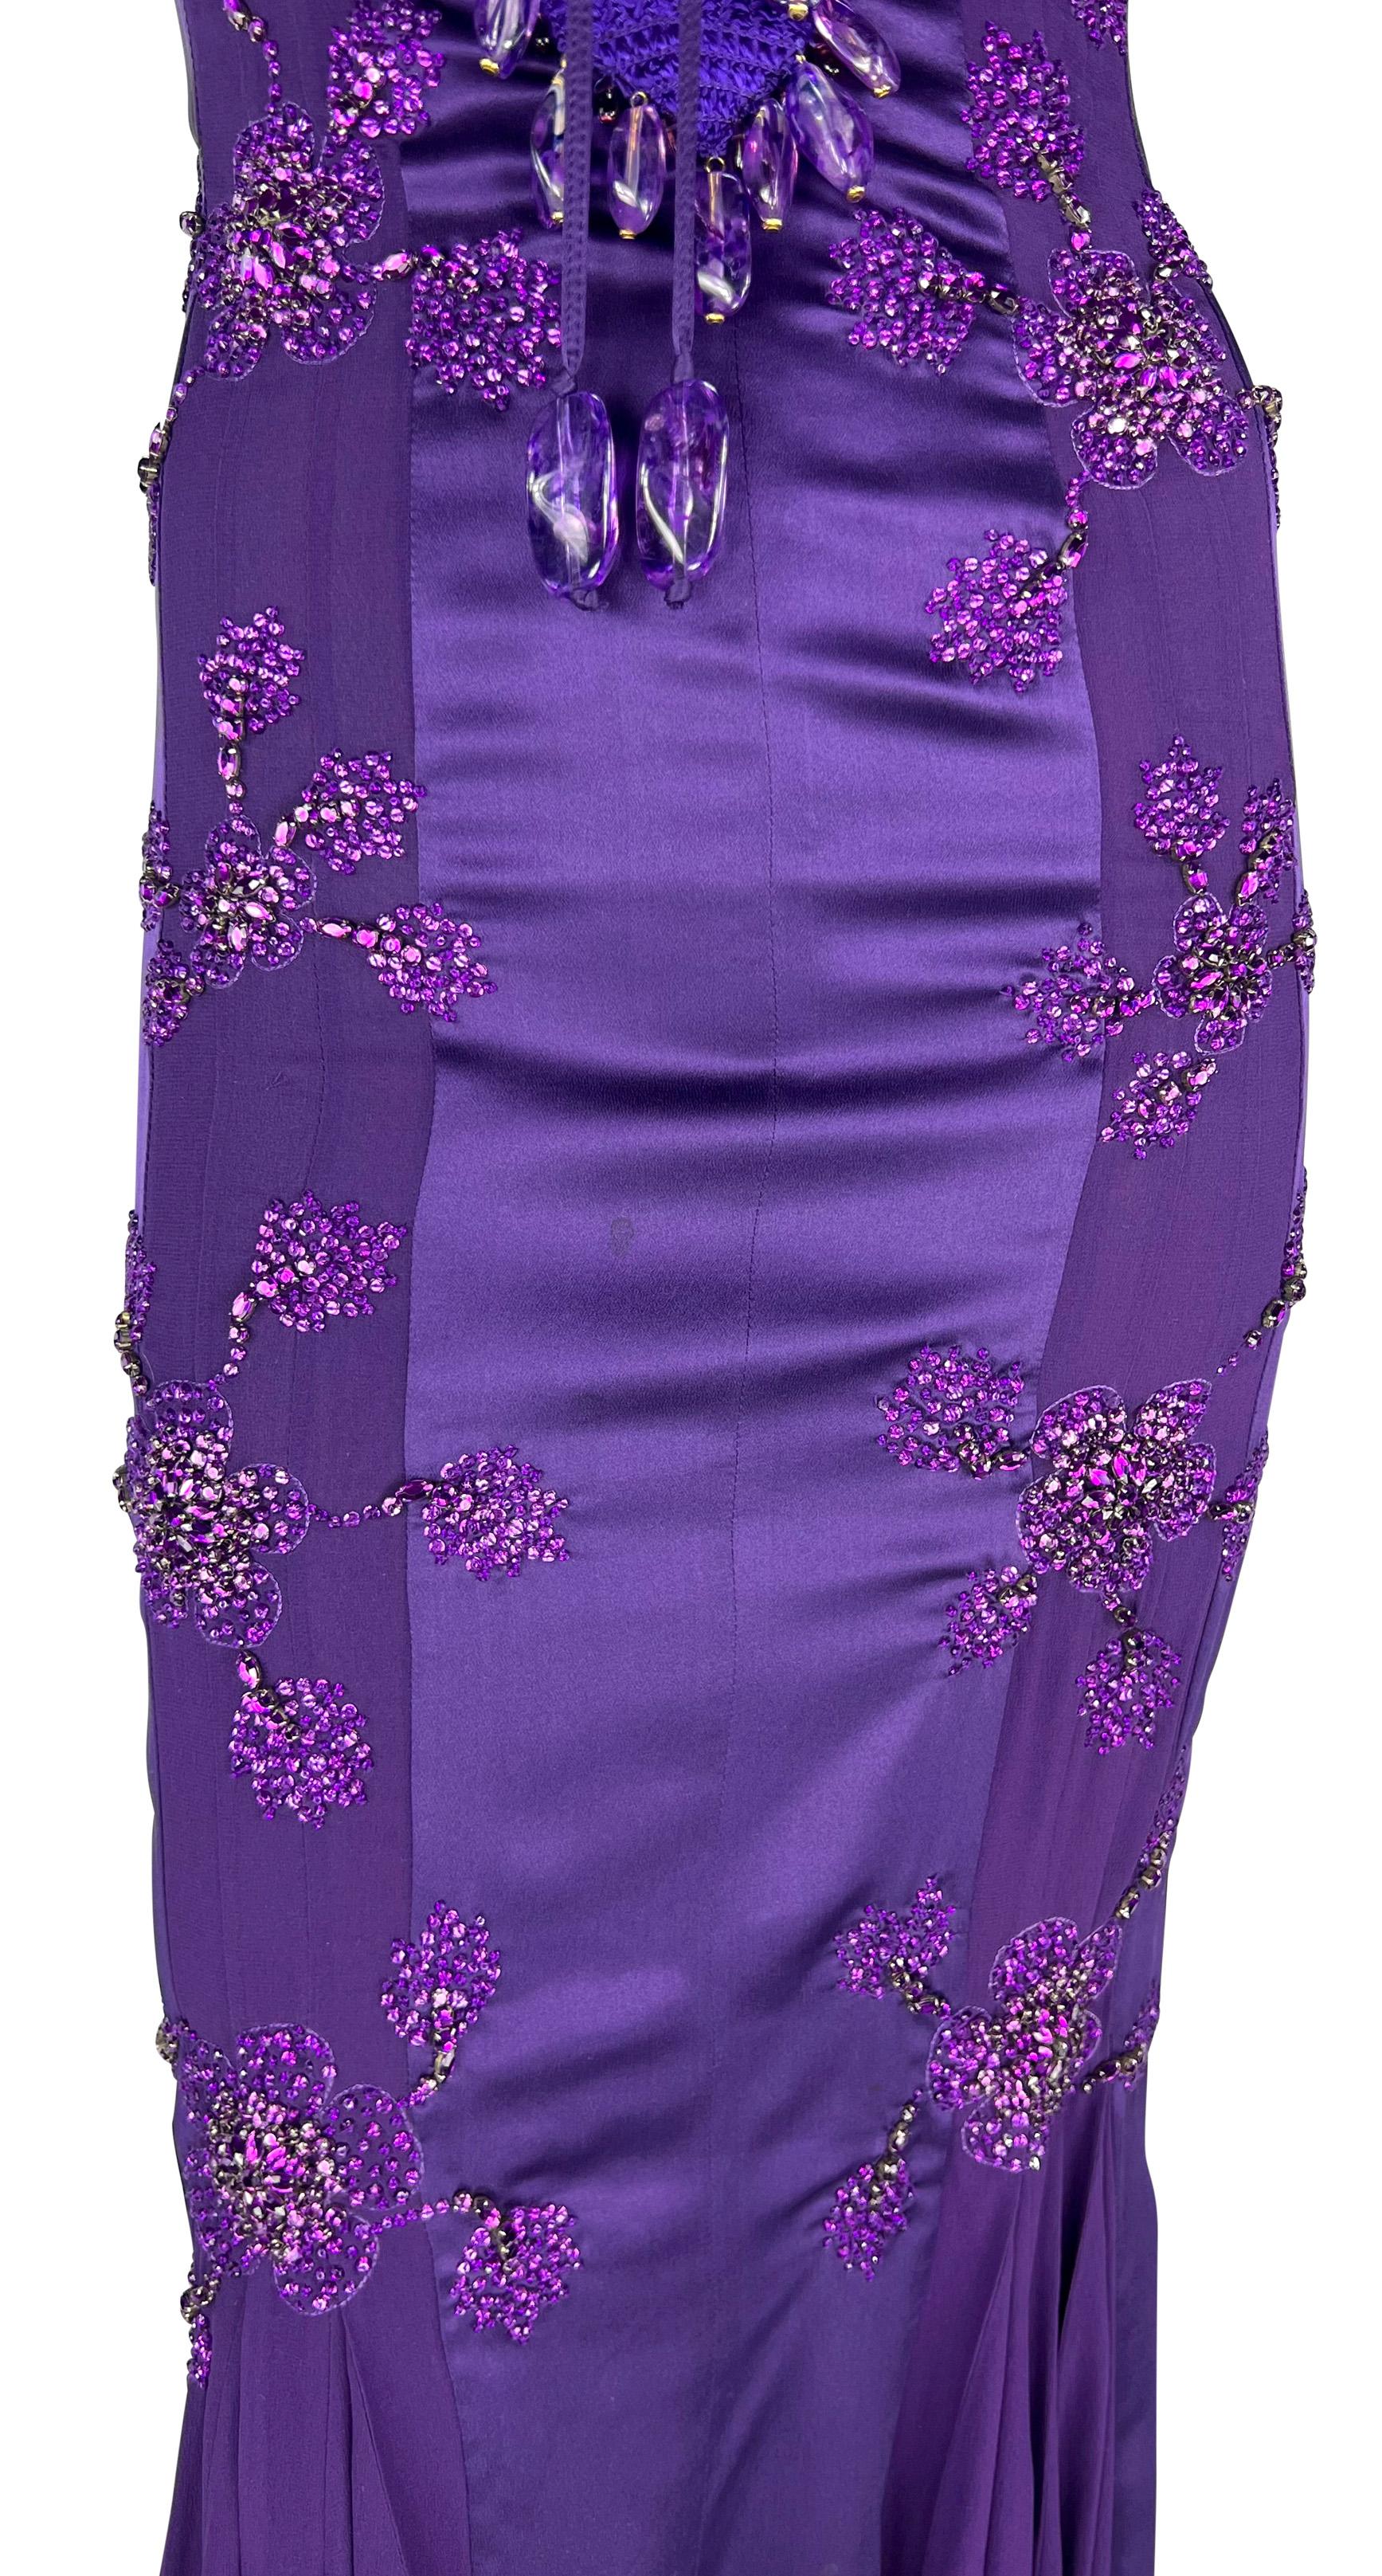 S/S 2005 Emanuel Ungaro by Giambattista Valli Rhinestone Purple Lace-Up Gown For Sale 3